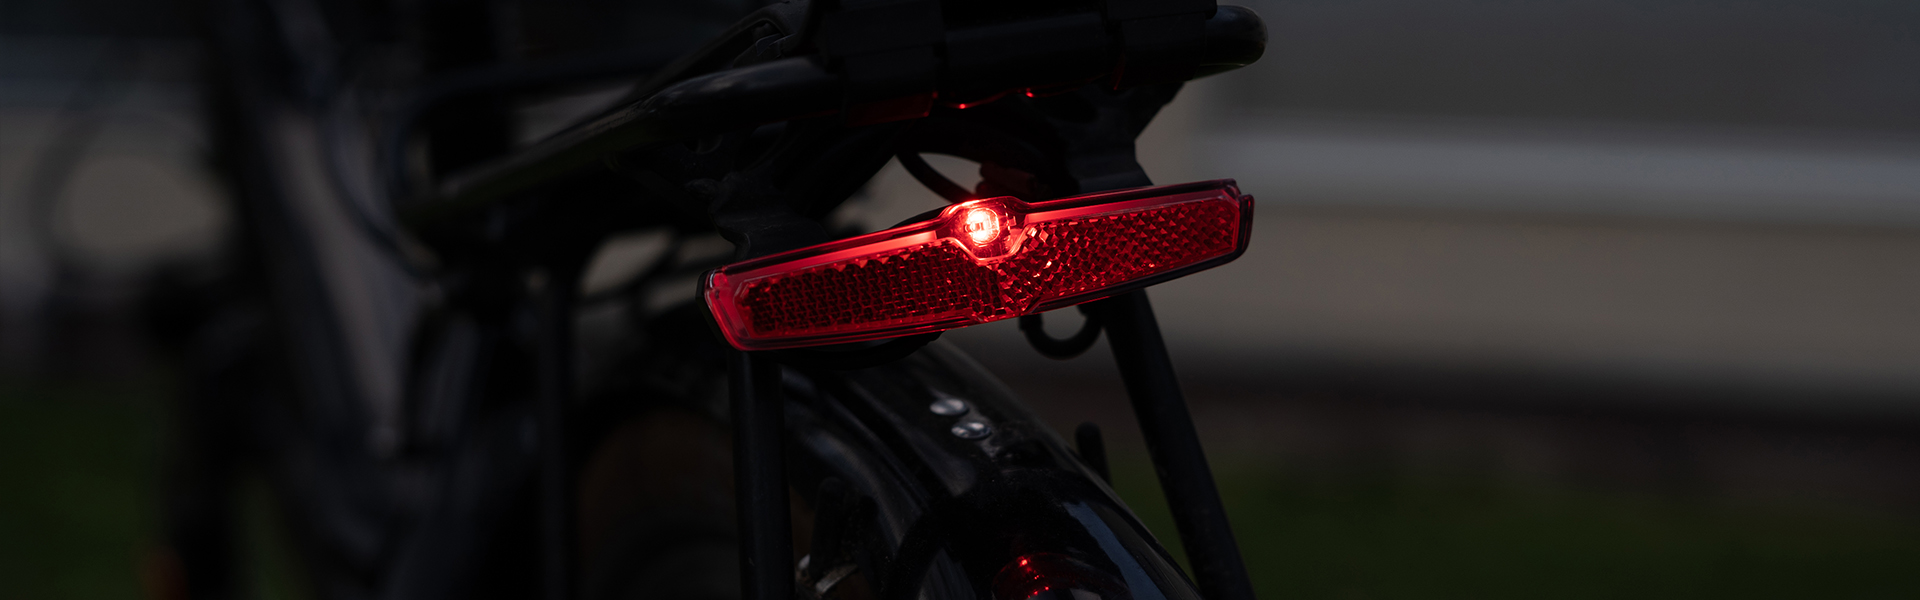 Sate-lite 500 Lemen  USB rechargeable bike light eletric bike front light CREE  LED waterproof